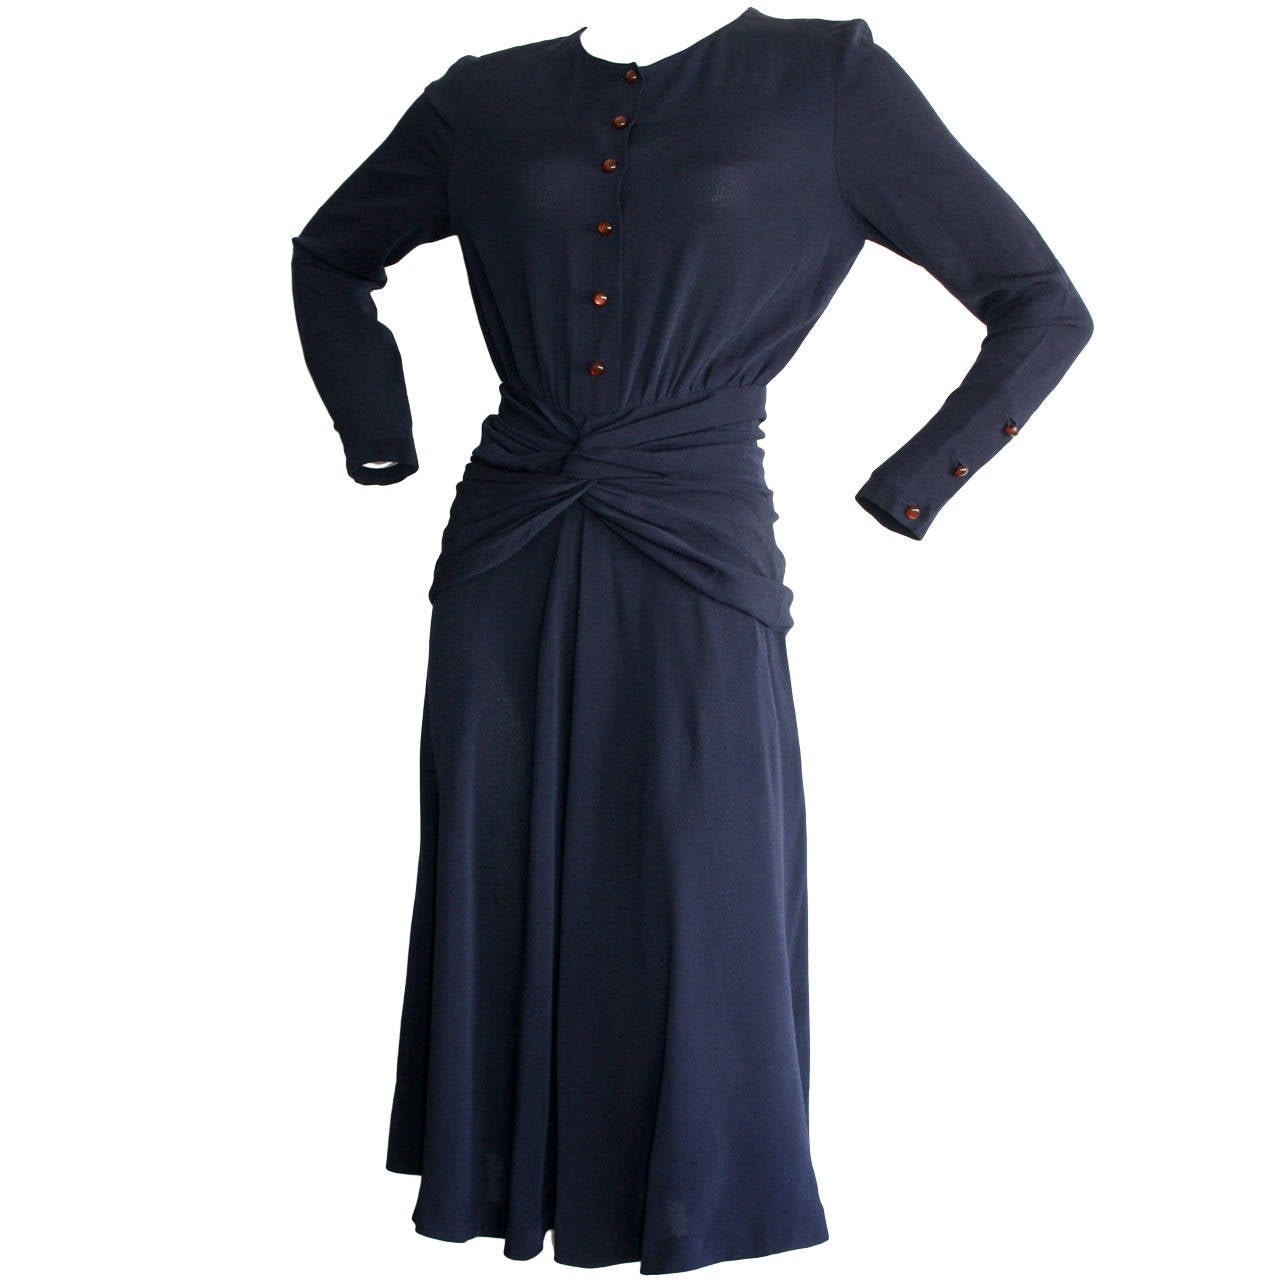 Vintage Chloe by Karl Lagerfeld 1930s Style Navy Blue Dress